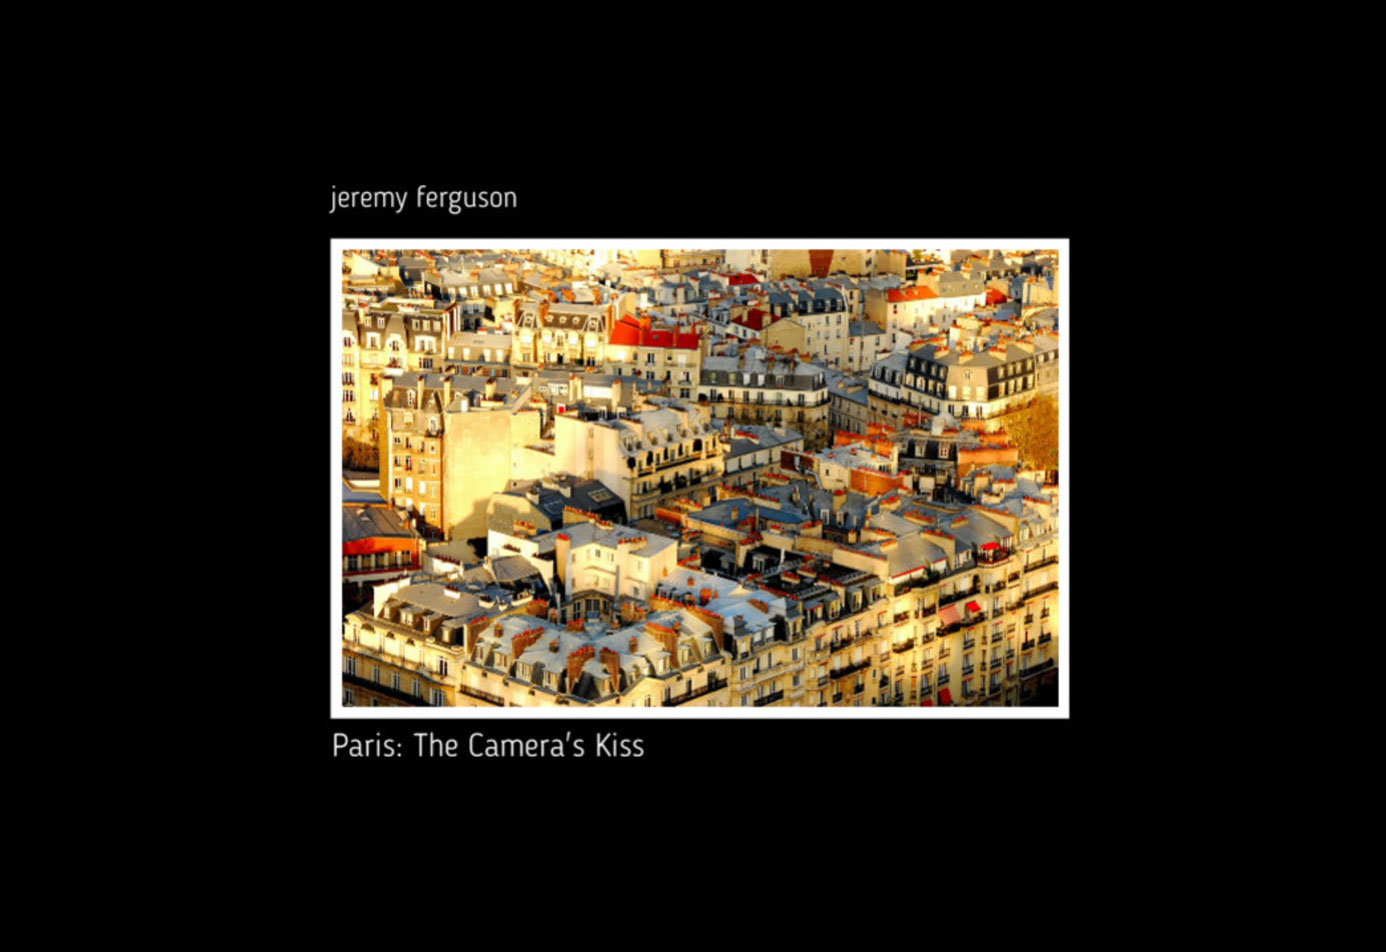 Paris: The Camera's Kiss by Jeremy Ferguson